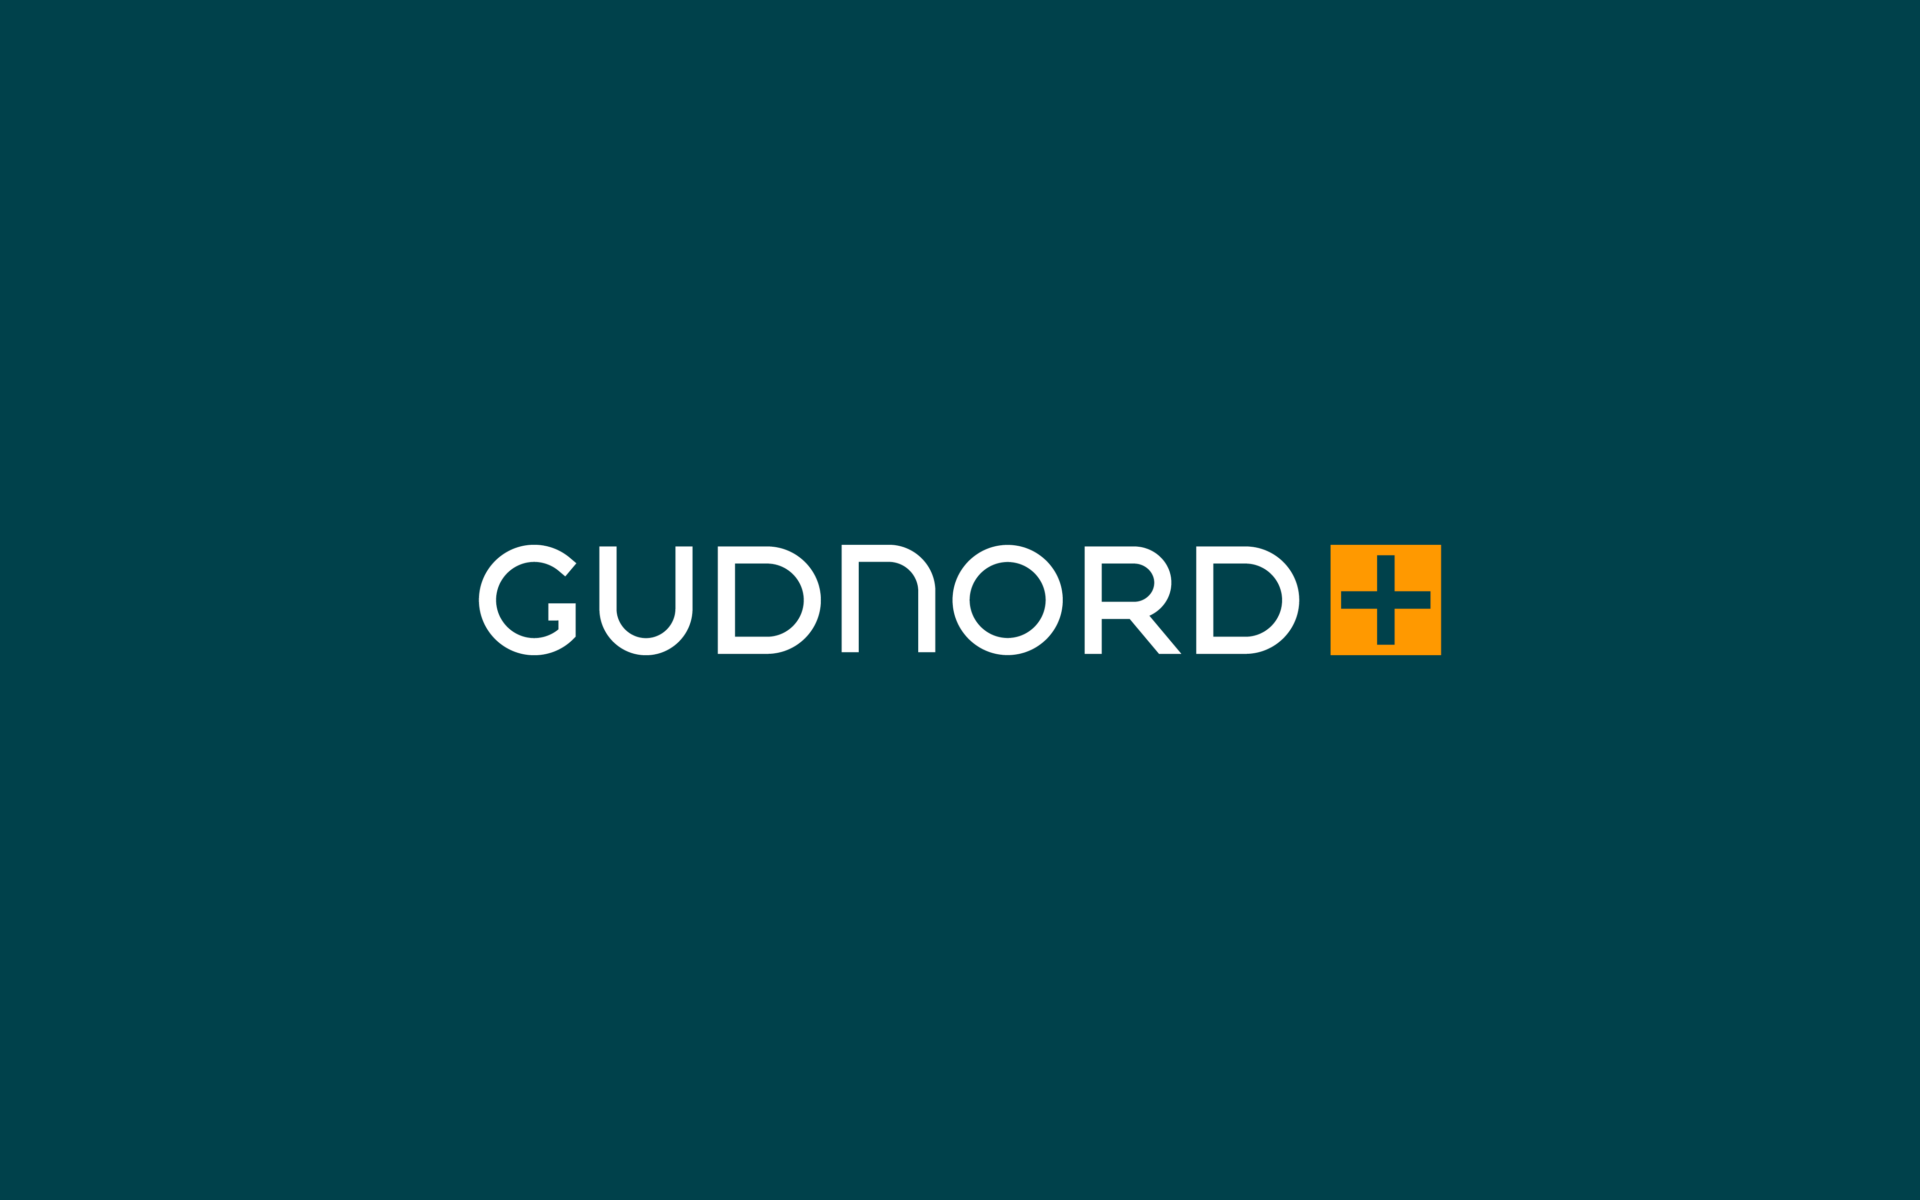 Gudnord+ / PULT